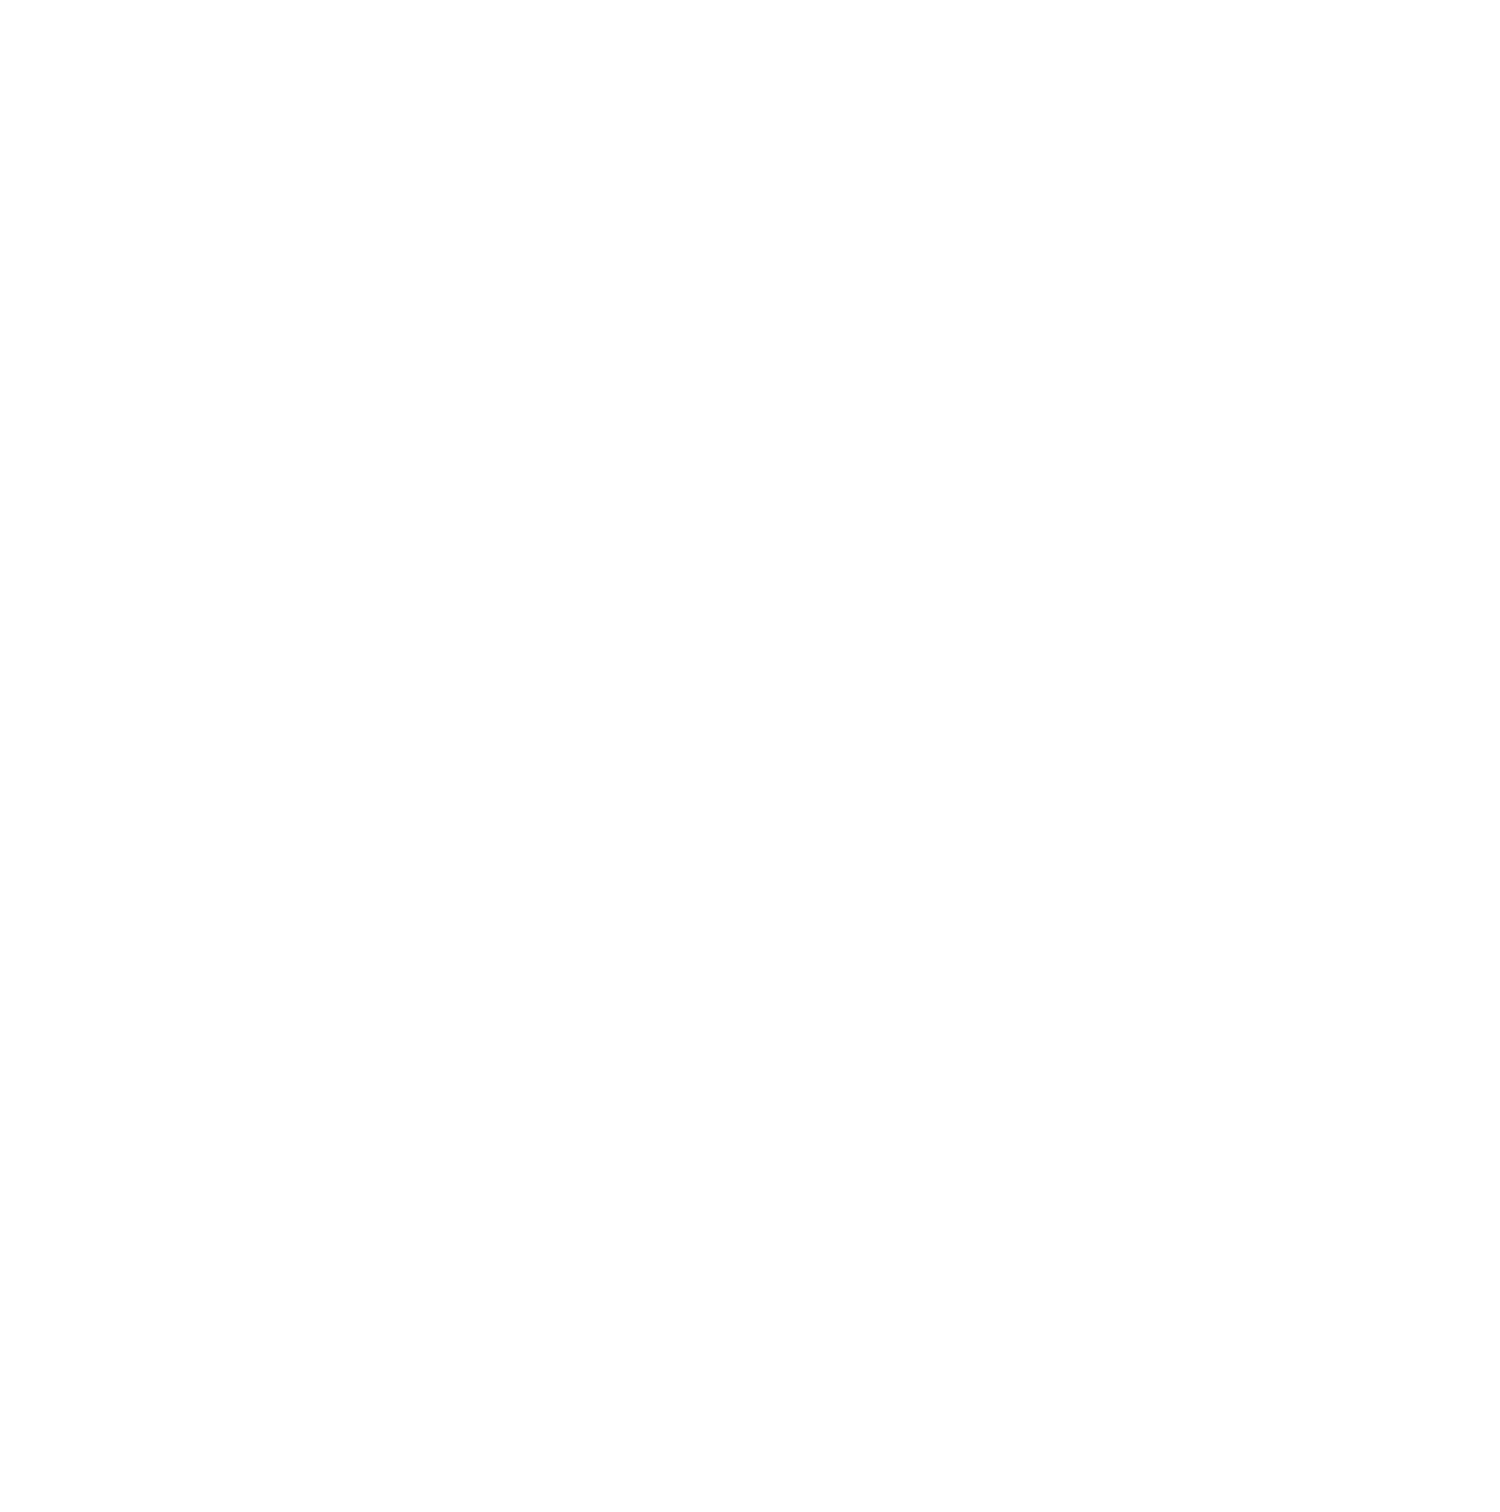 Columbia Repertory Dance Company